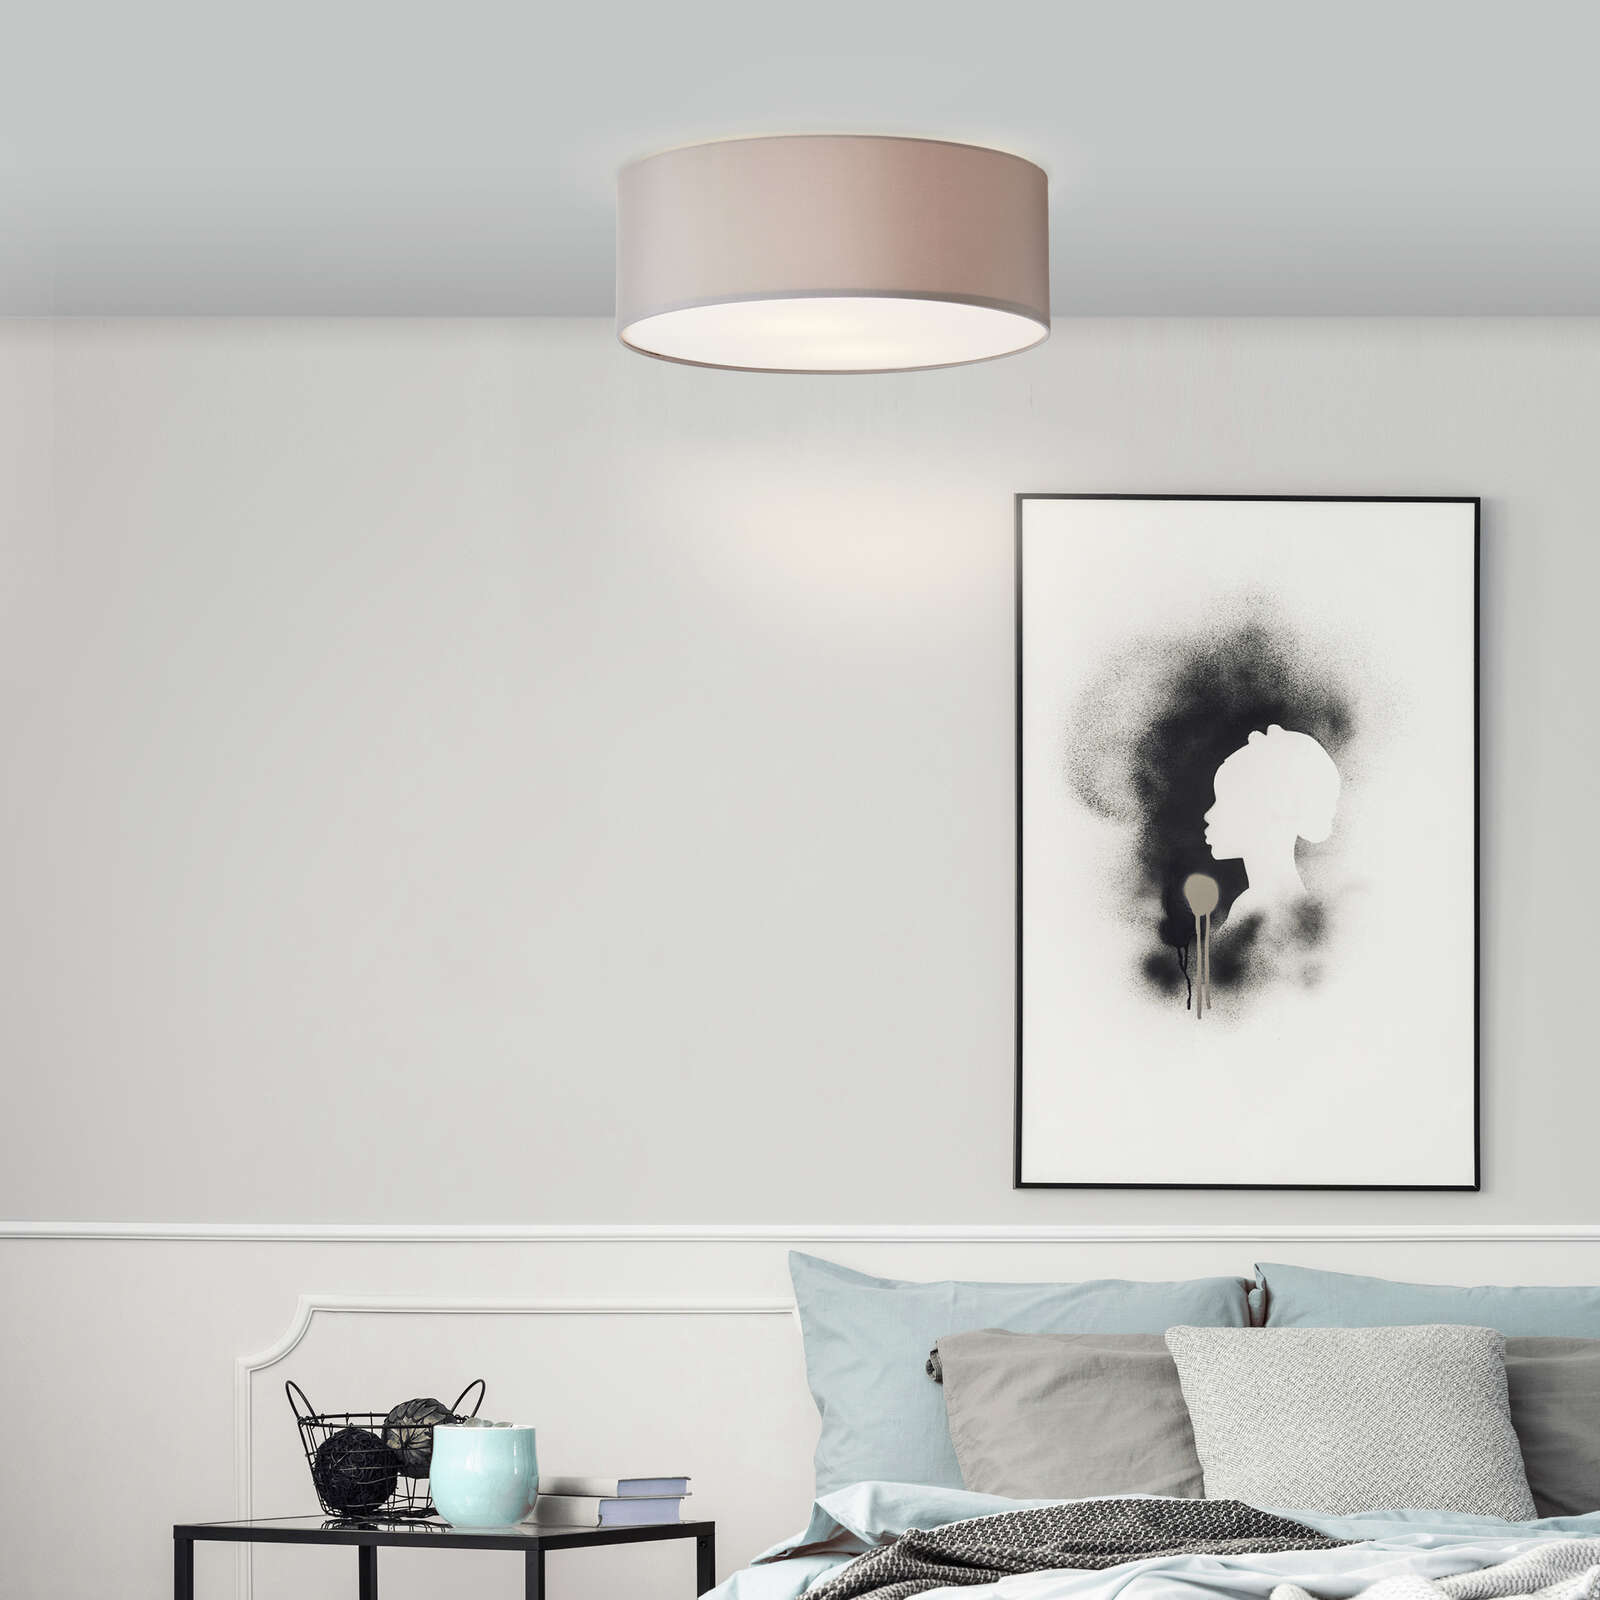             Textile ceiling light - Alina - Grey
        